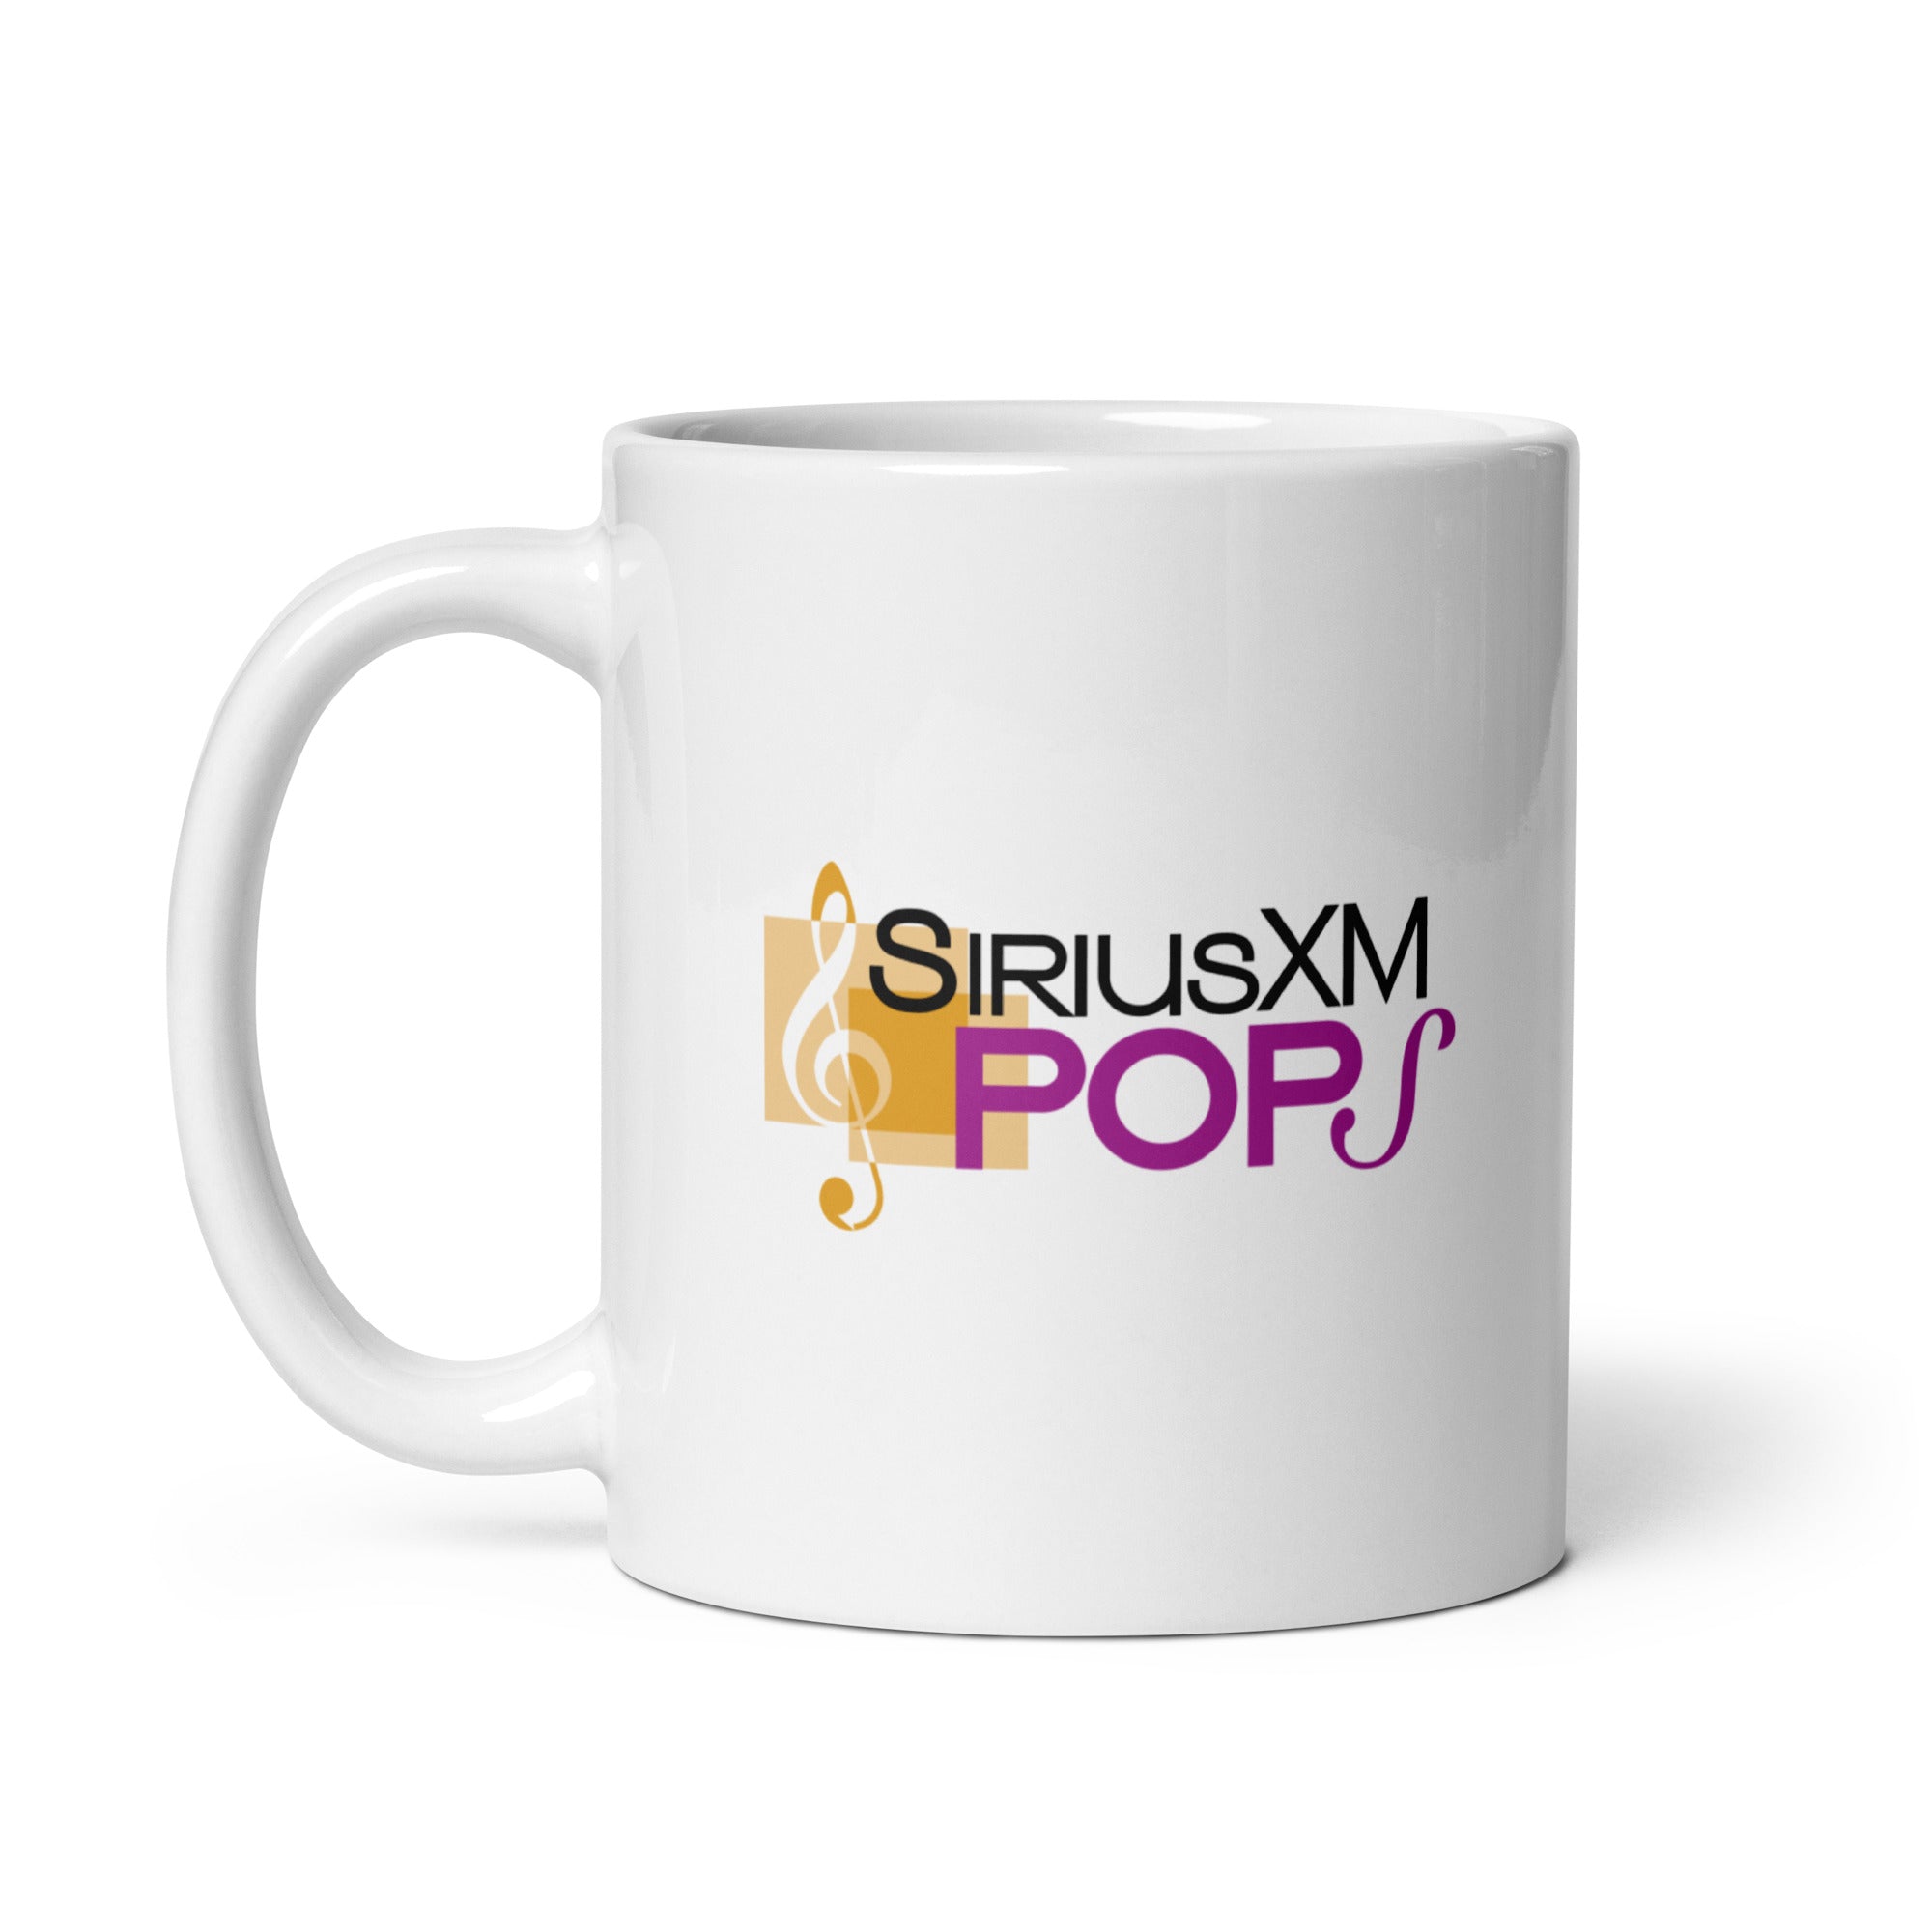 SiriusXM Pops: Mug